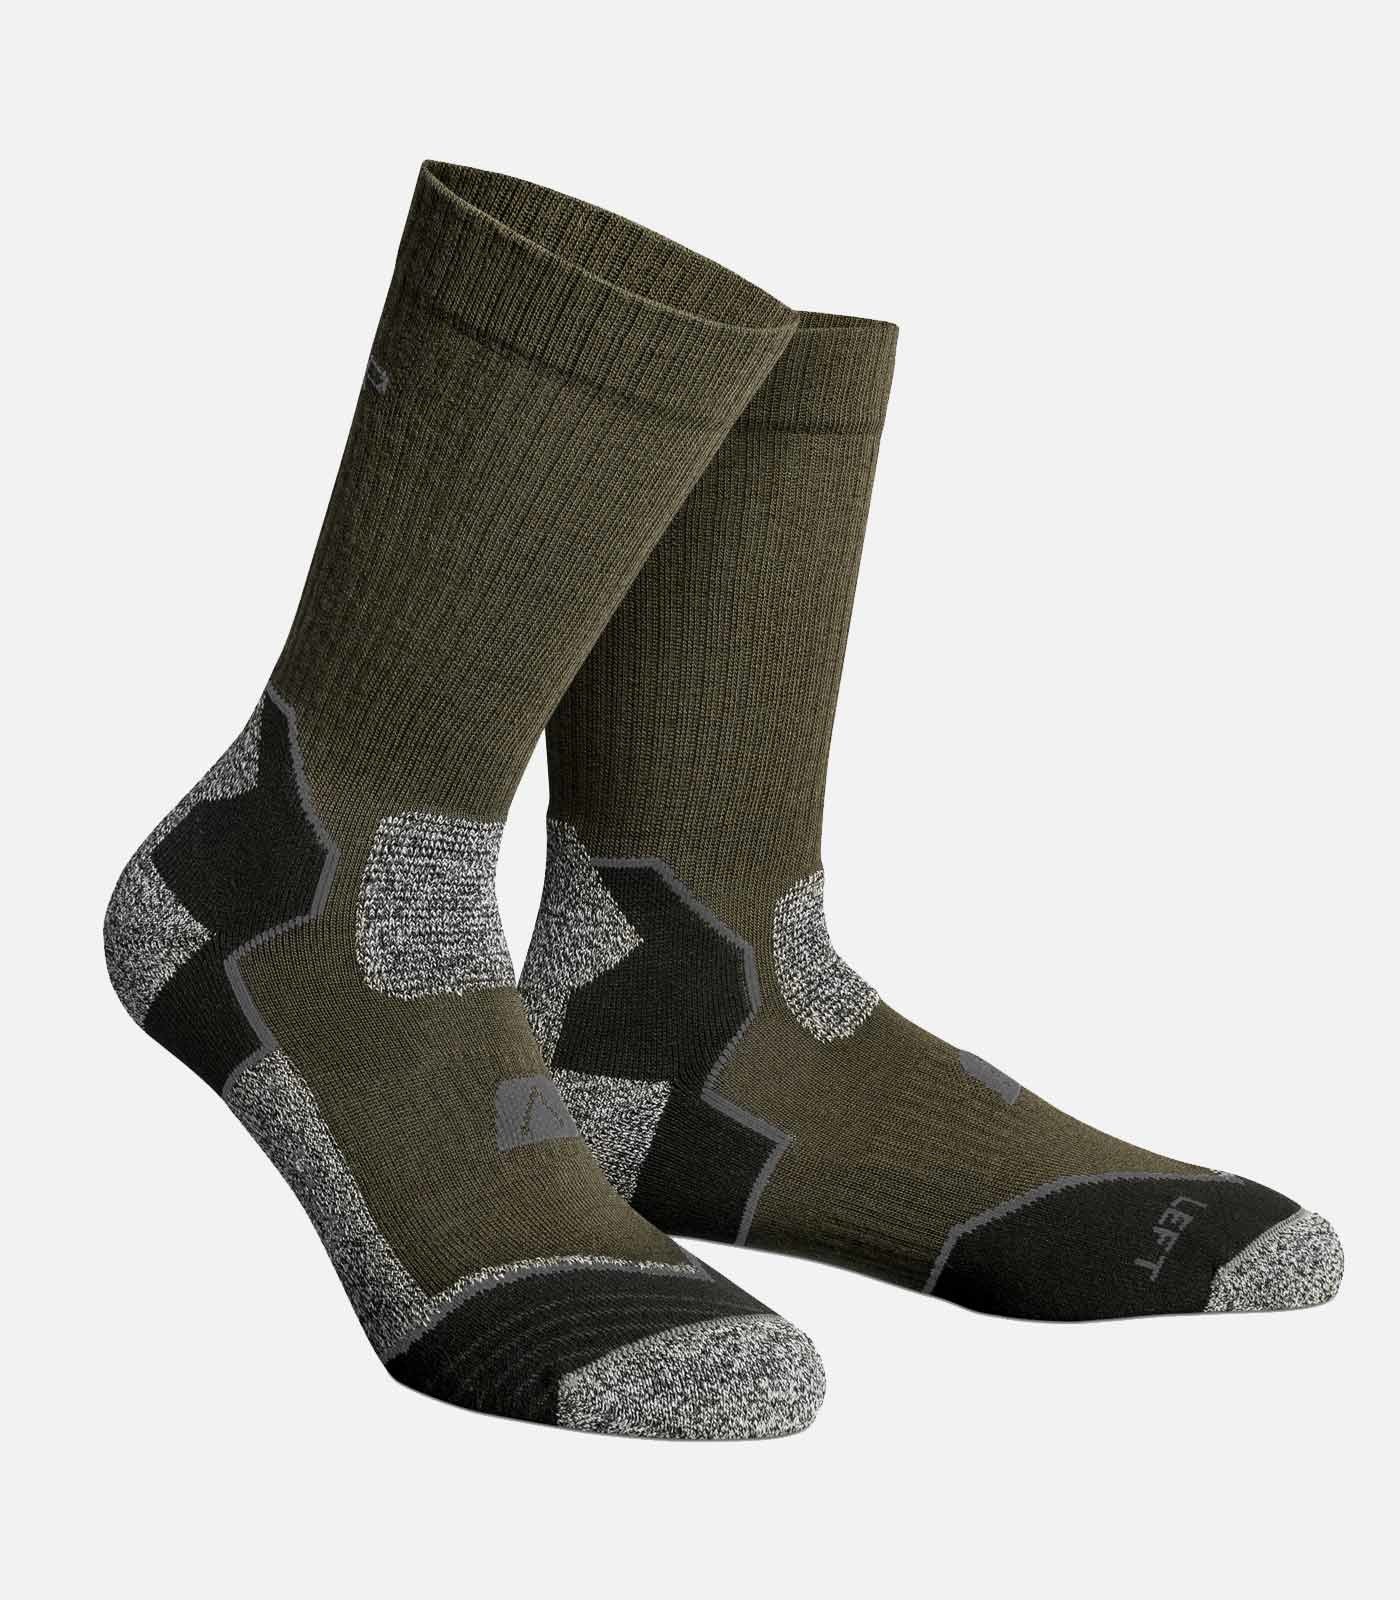 High-performance hiking socks